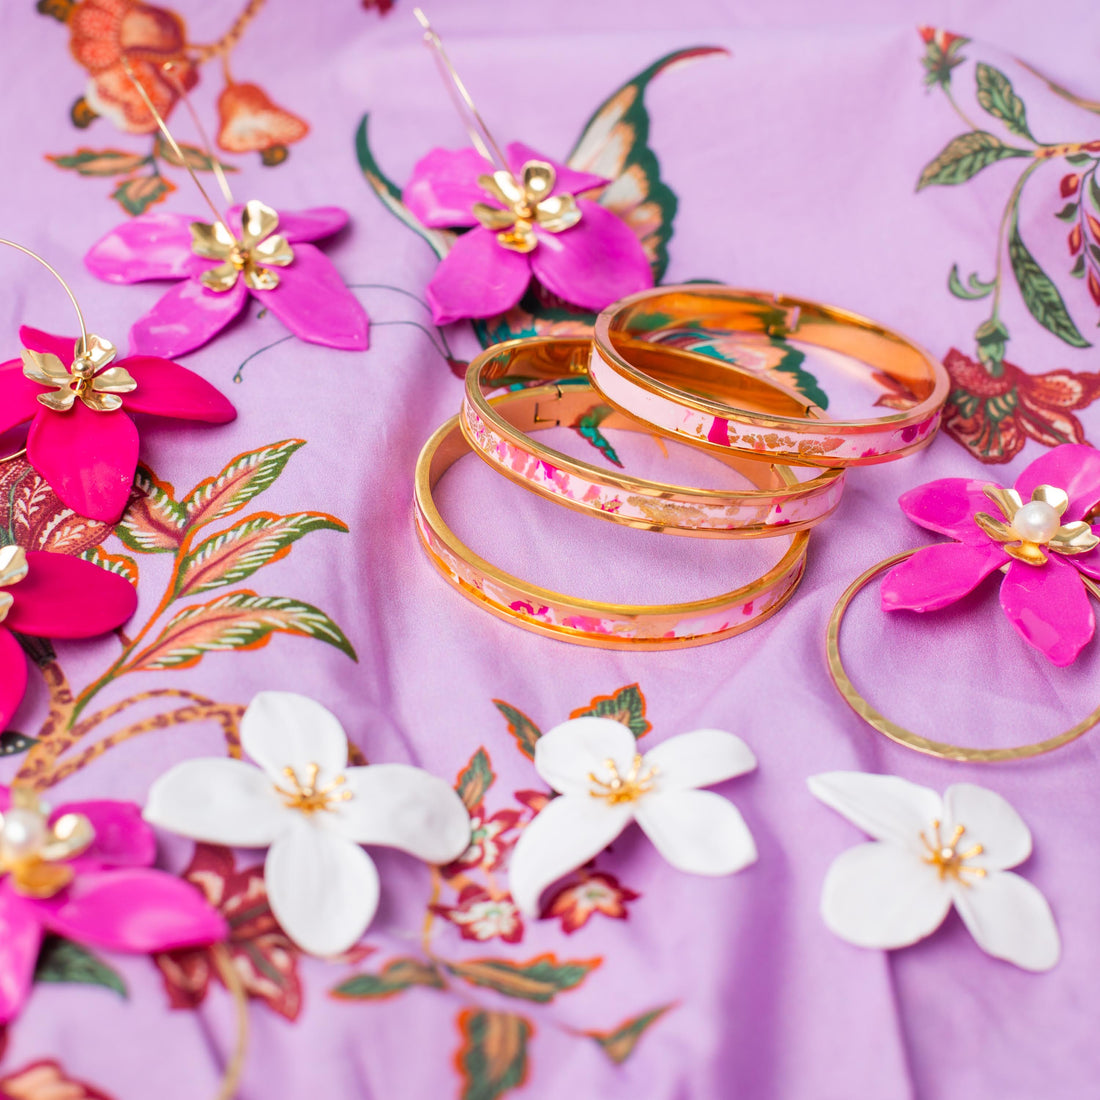 Fuscia Pink Charleston Flower Earring